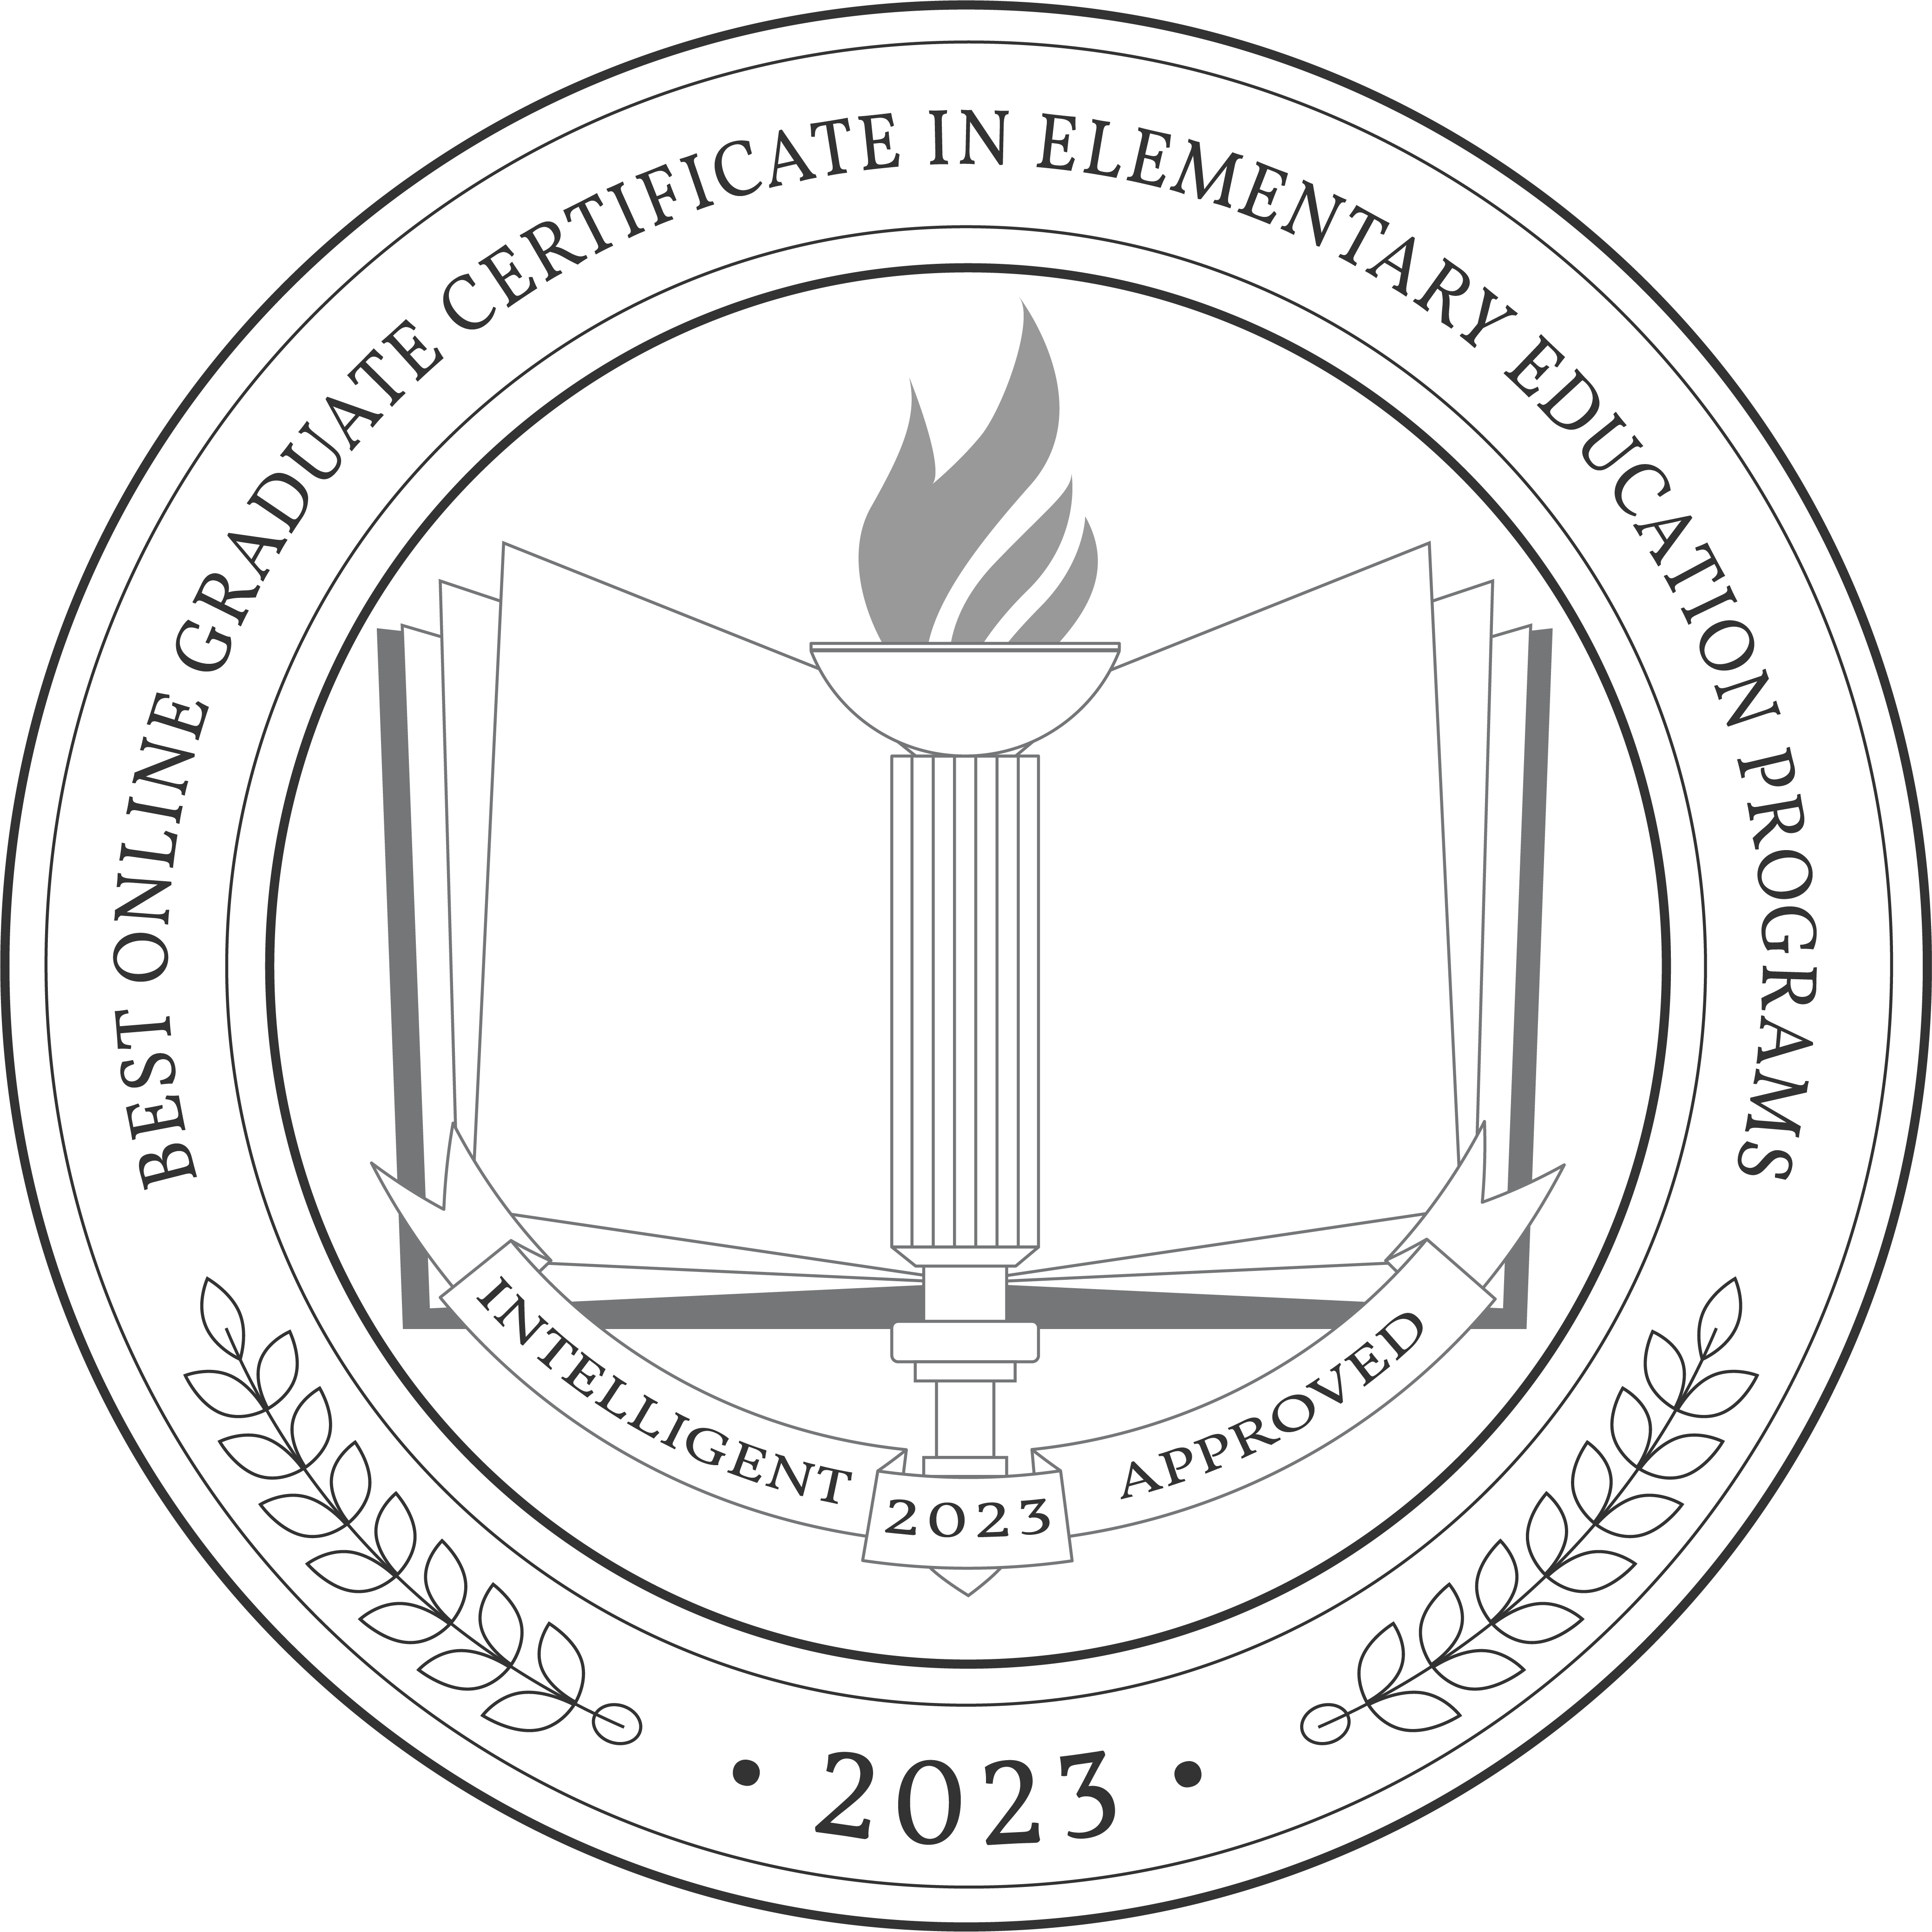 Best Online Graduate Certificate in Elementary Education Programs badge